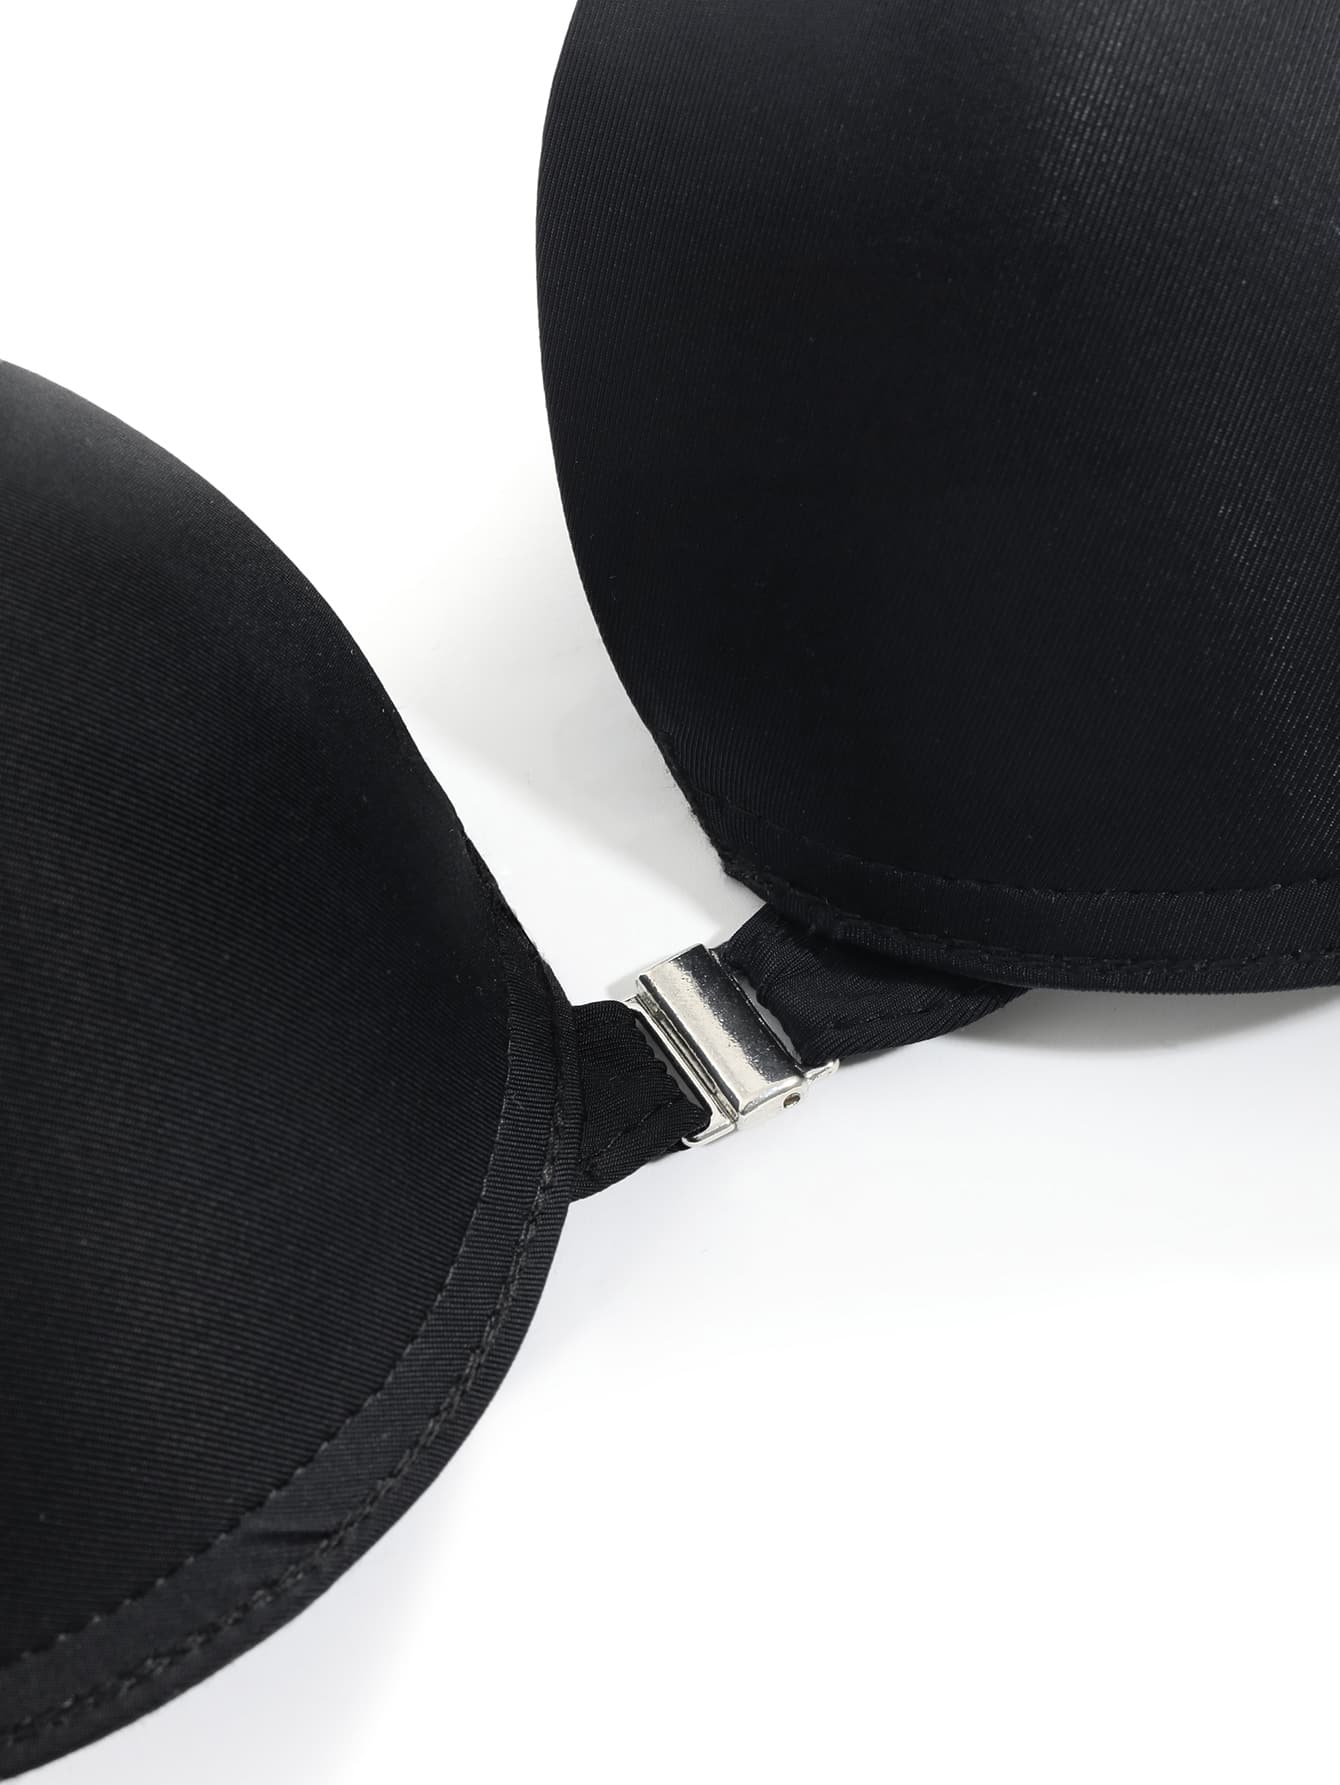 Hunpta Strapless Bras For Women Sexy Seamless Non-Skid Breast Wiping Back  Bra Underwear (With Transparent Shoulder Strap)